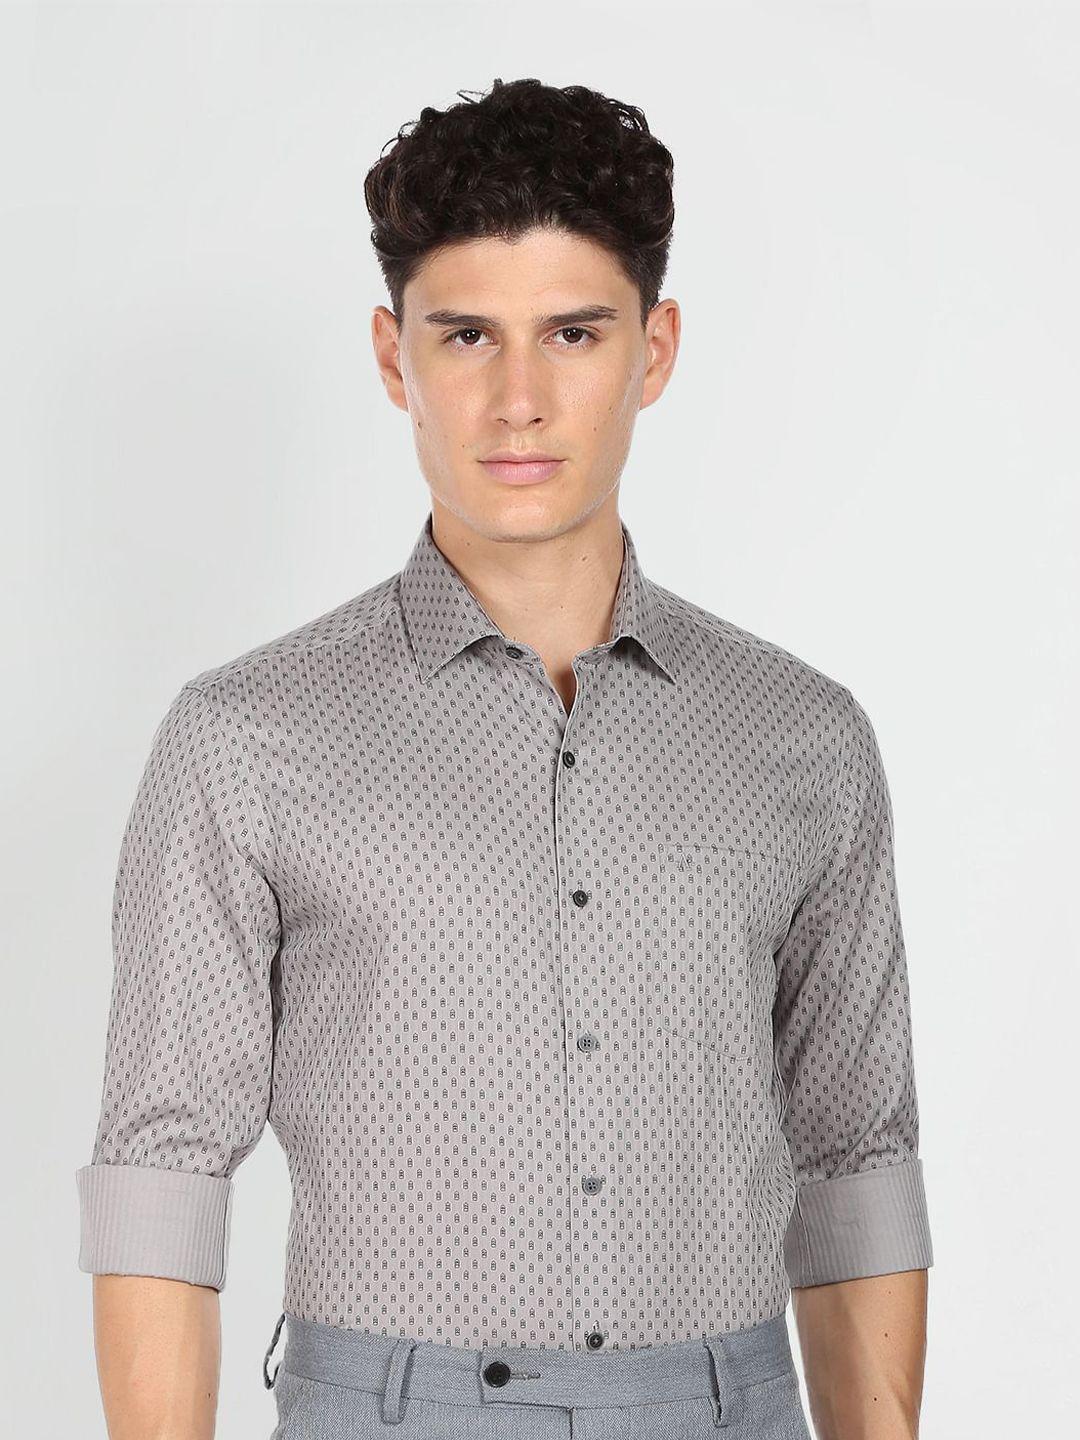 arrow geometric printed pure cotton slim fit formal shirt